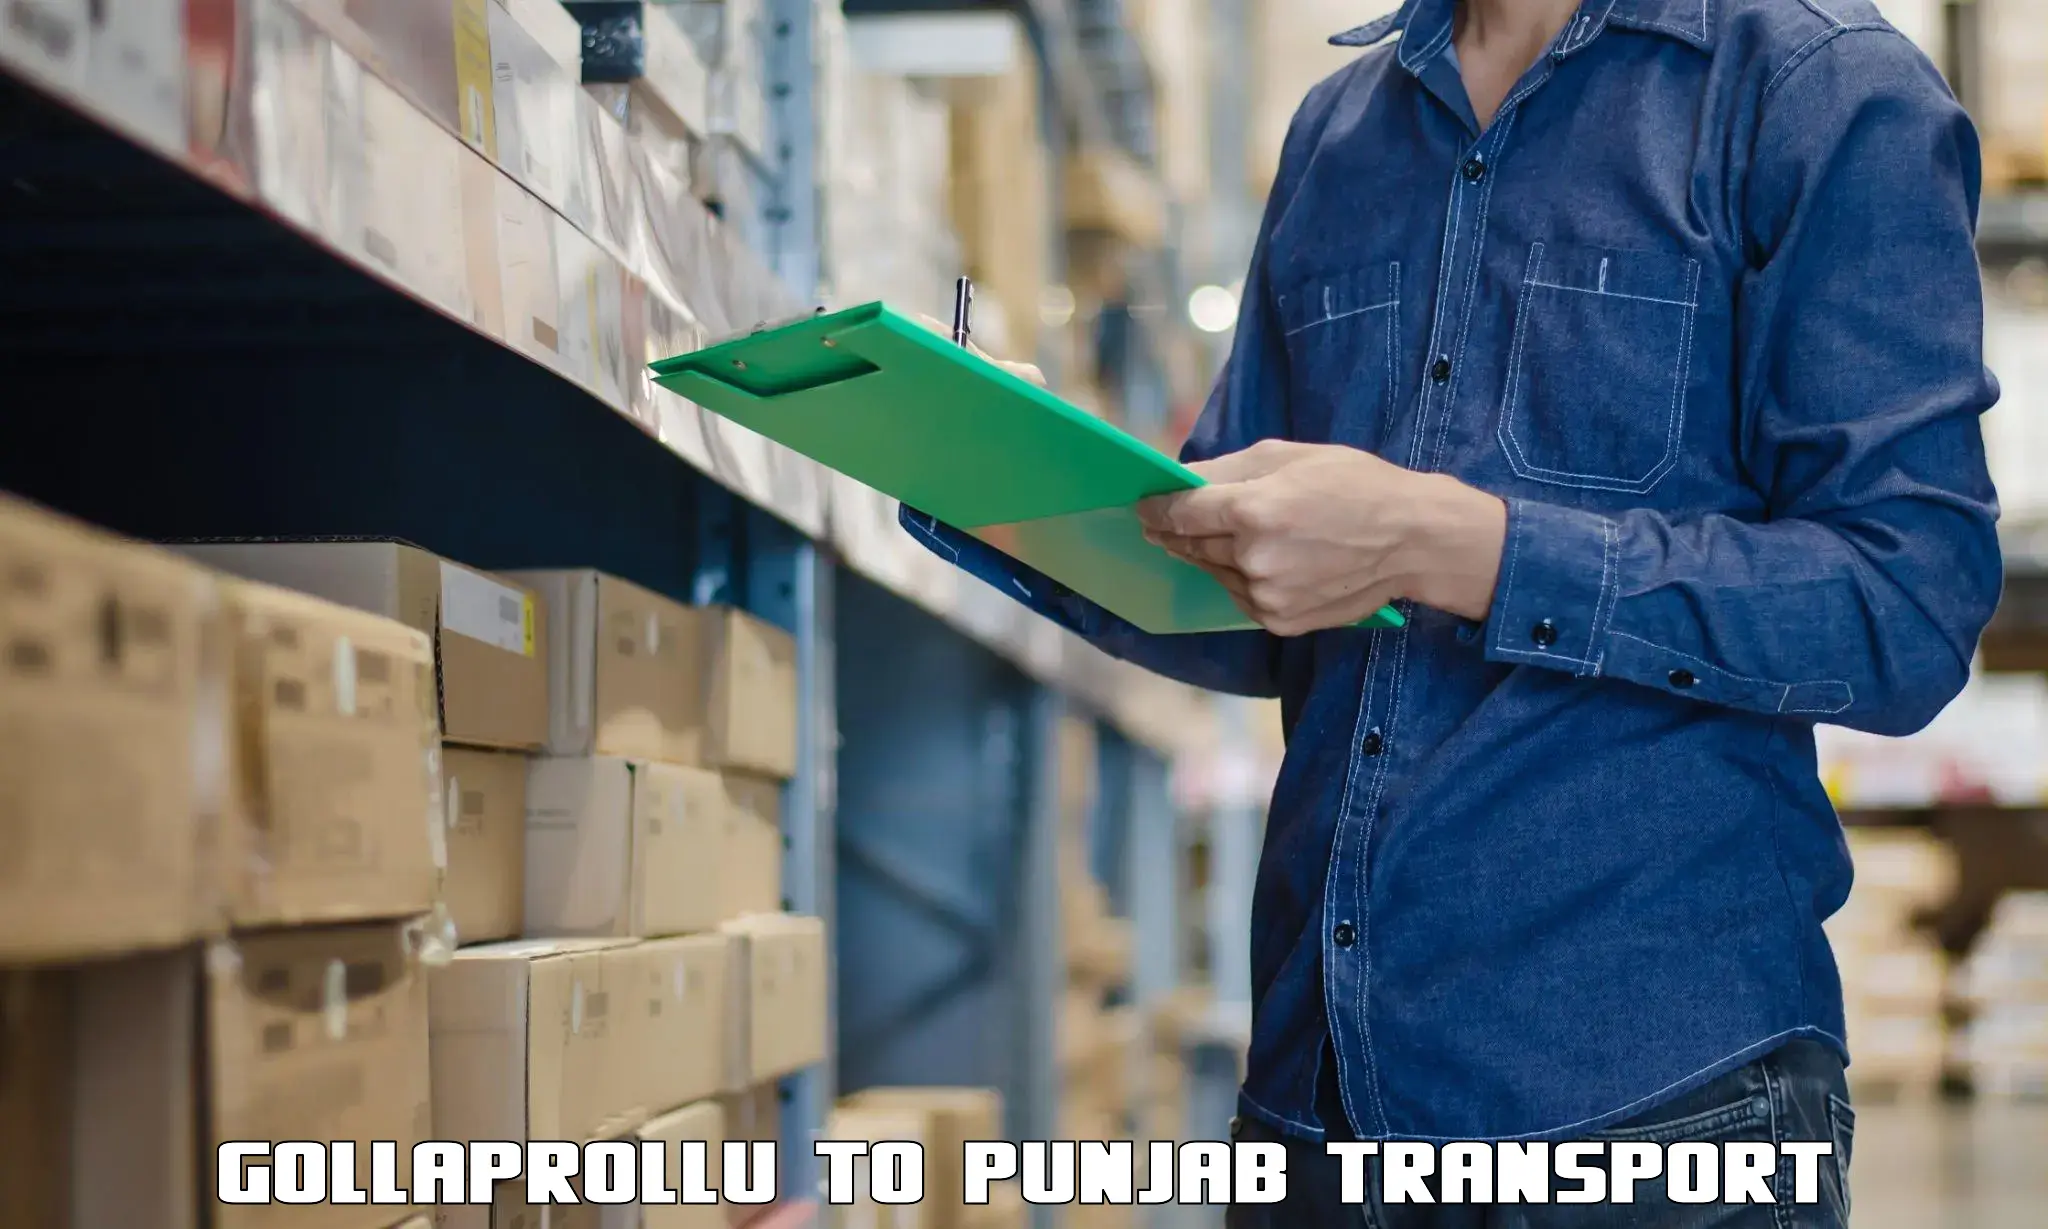 Logistics transportation services Gollaprollu to Punjab